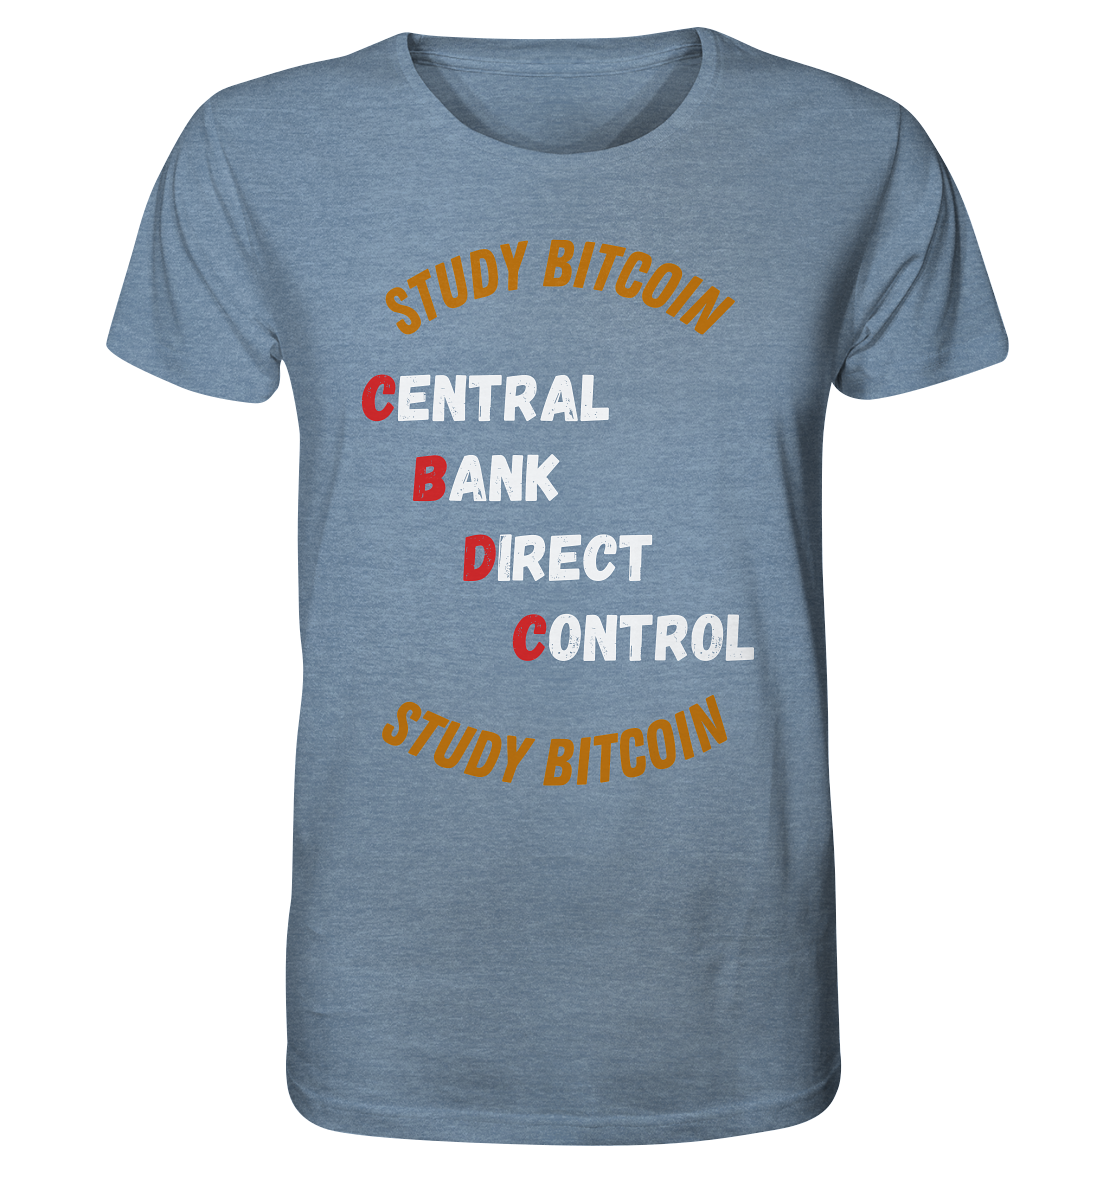 CENTRAL BANK DIRECT CONTROL - STUDY BITCOIN   - Organic Shirt (meliert)